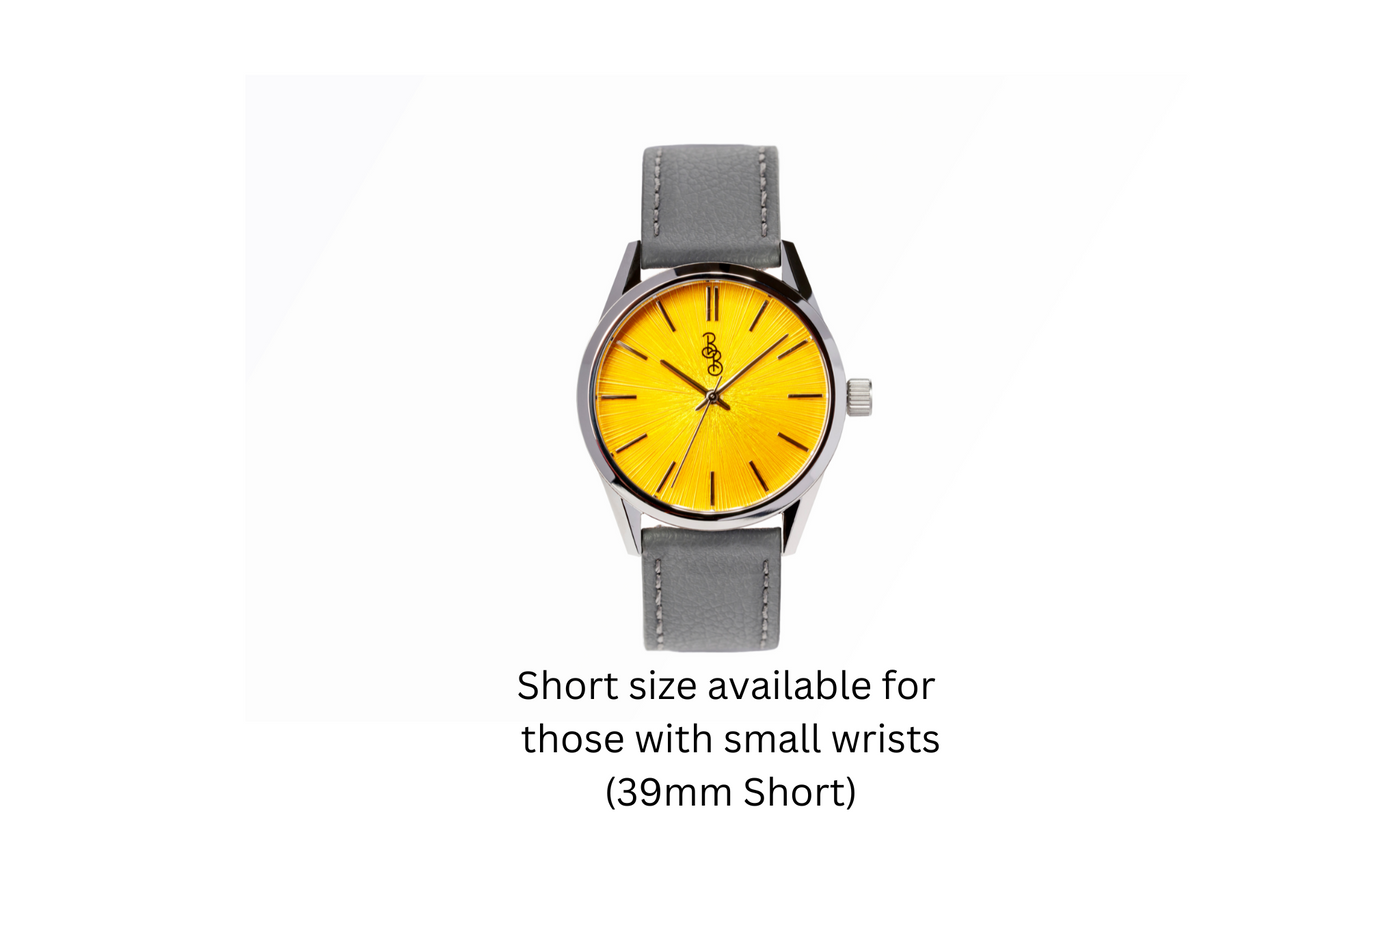 Yellow Sunburst Watch